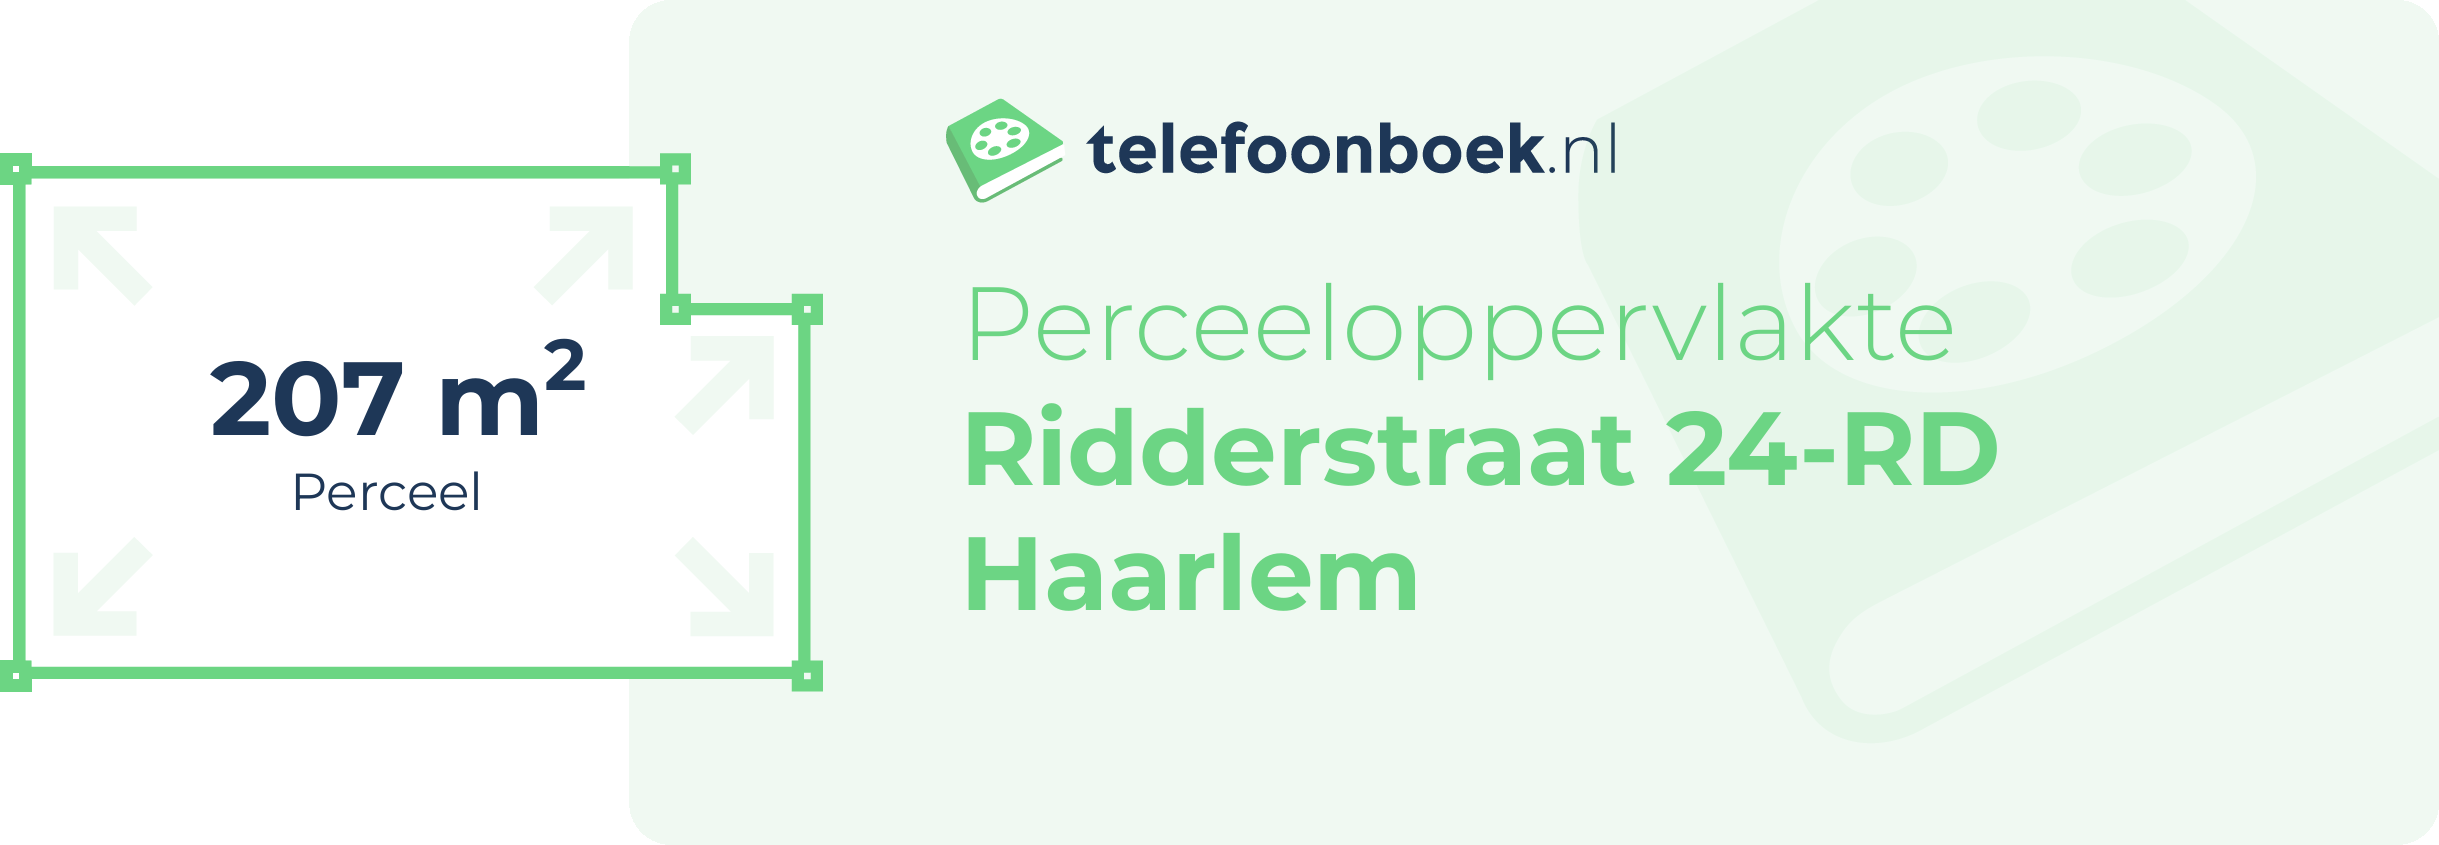 Perceeloppervlakte Ridderstraat 24-RD Haarlem